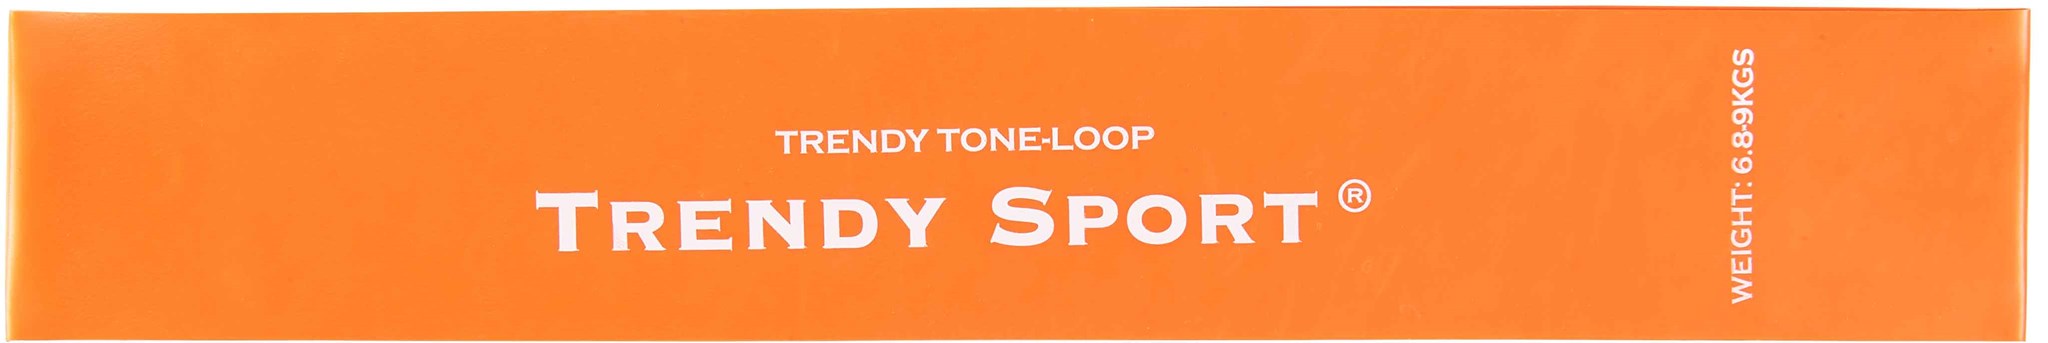 Bild für Kategorie TRENDY TONE-LOOP